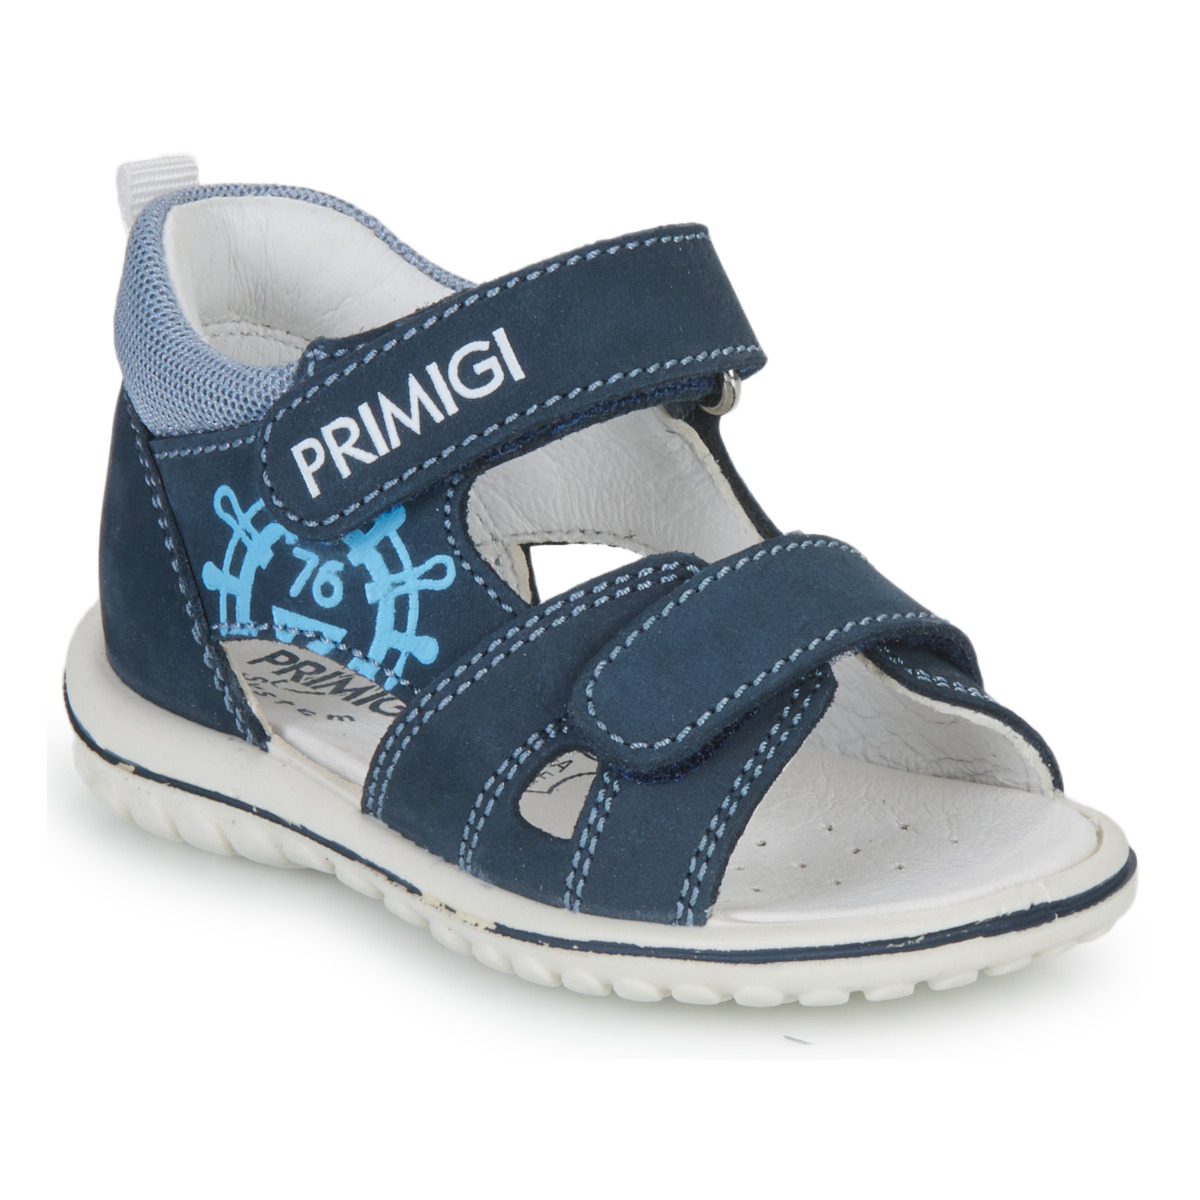 Schuhe Jungen Sandalen / Sandaletten Primigi BABY SWEET Marineblau